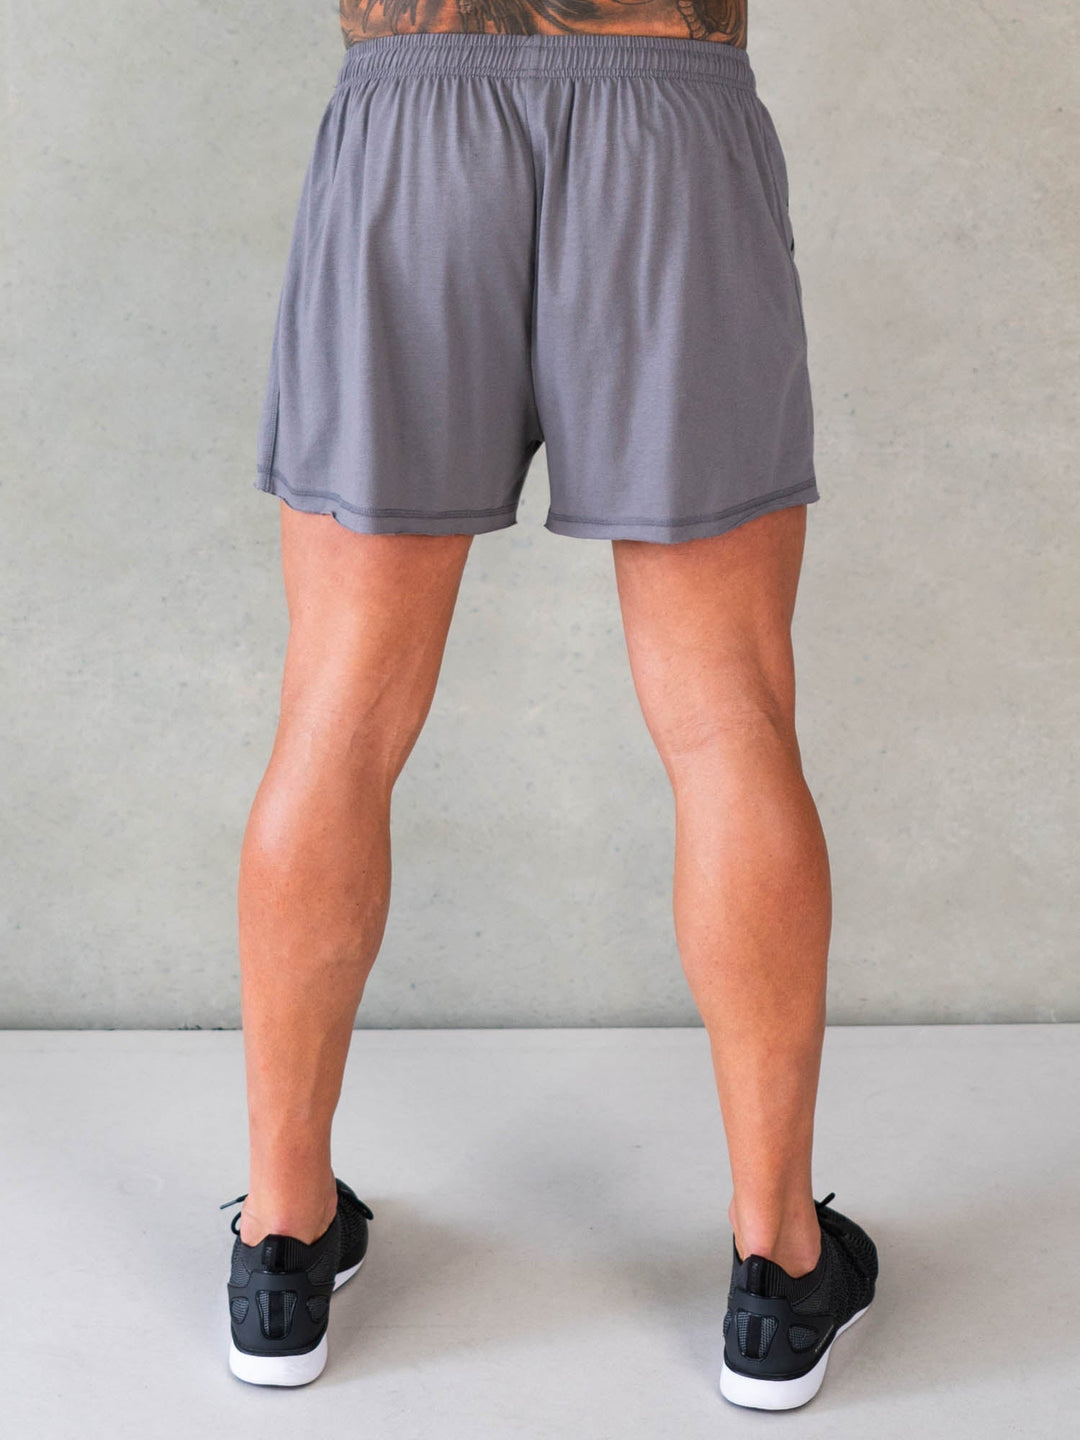 Octane Arnie Shorts - Steel Grey Clothing Ryderwear 